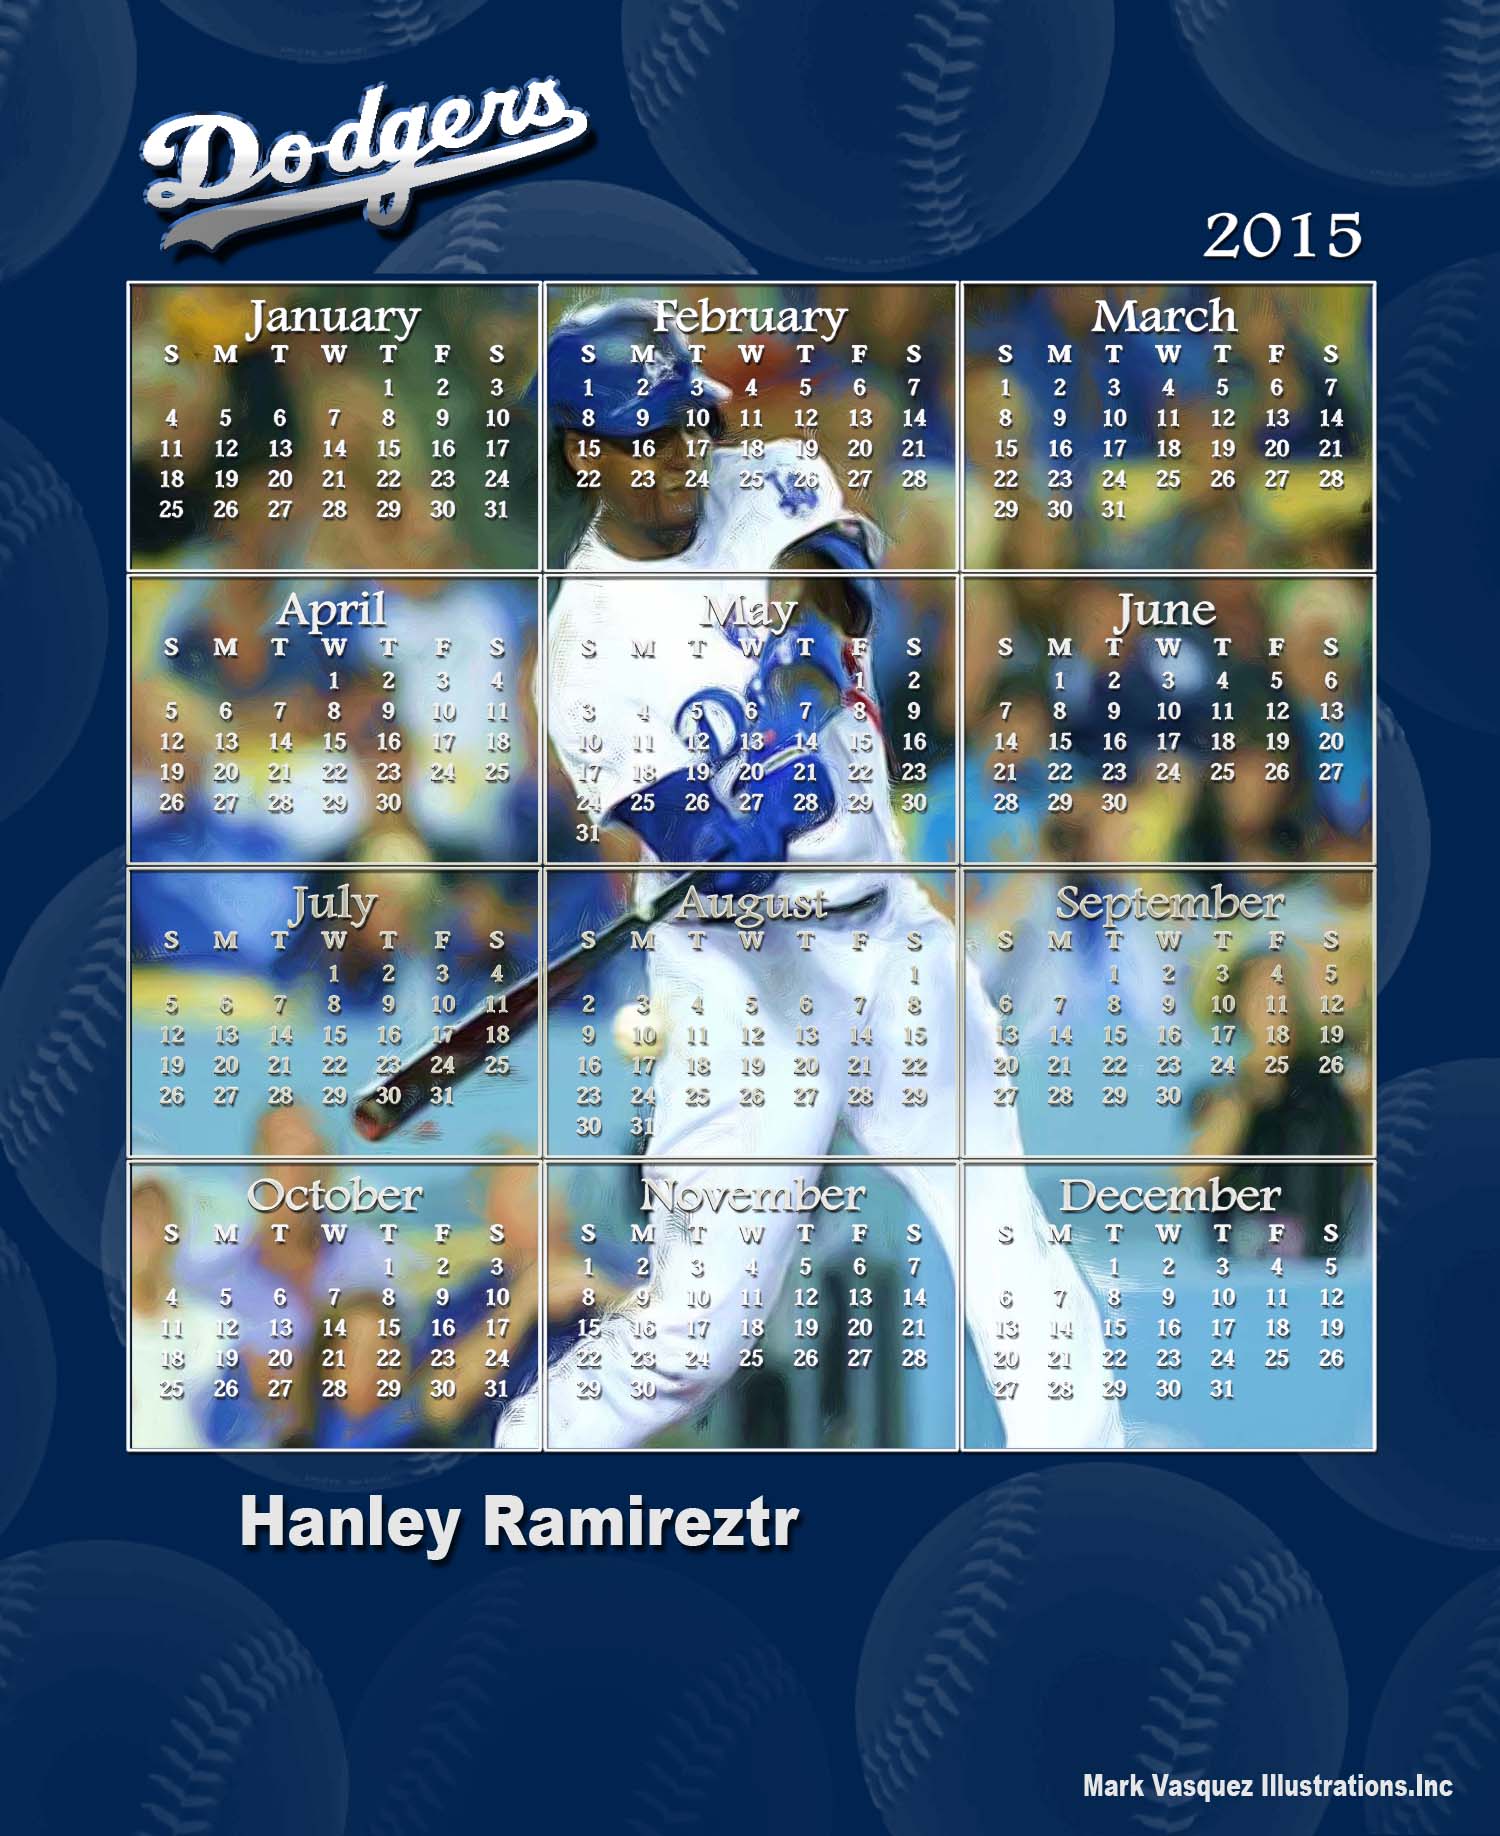 Los Angeles Dodgers Image Hanley Ramirez HD Wallpaper And